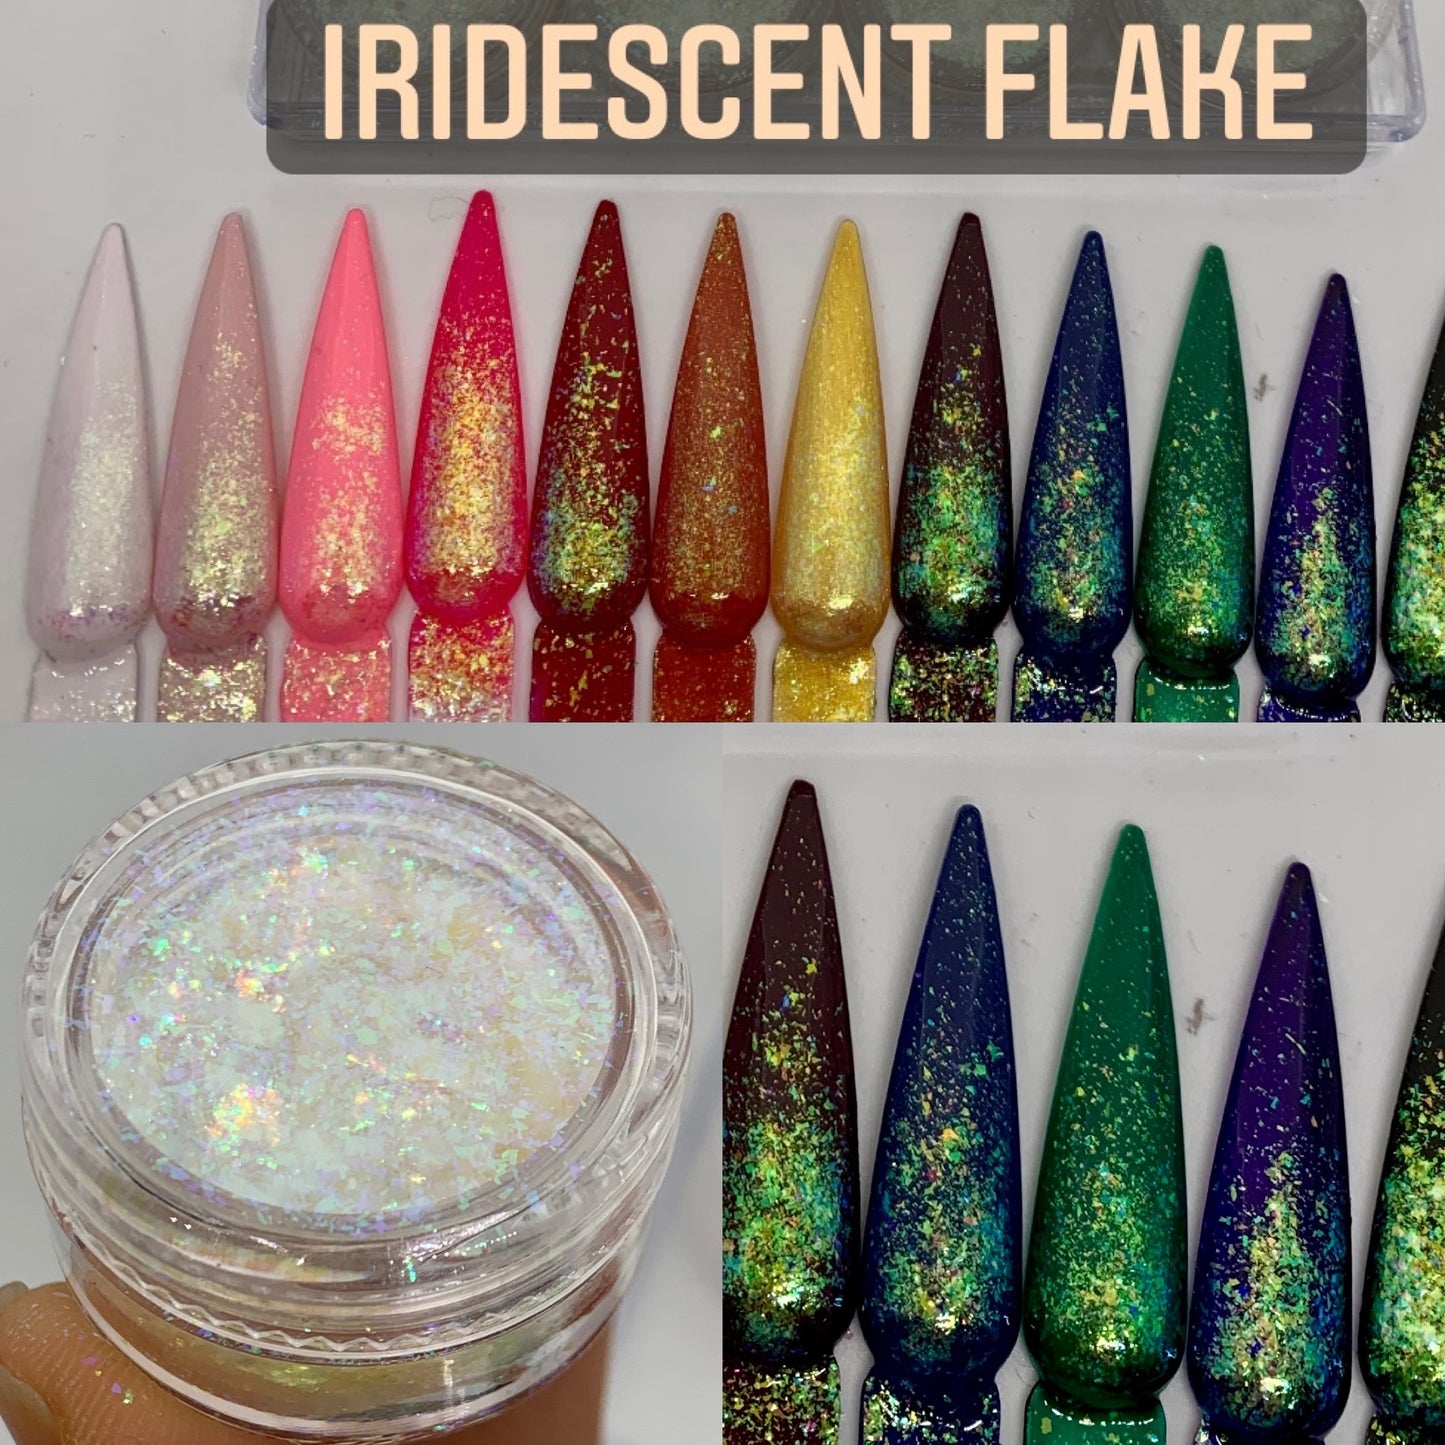 Iridescent flake Aurora (1 jar)